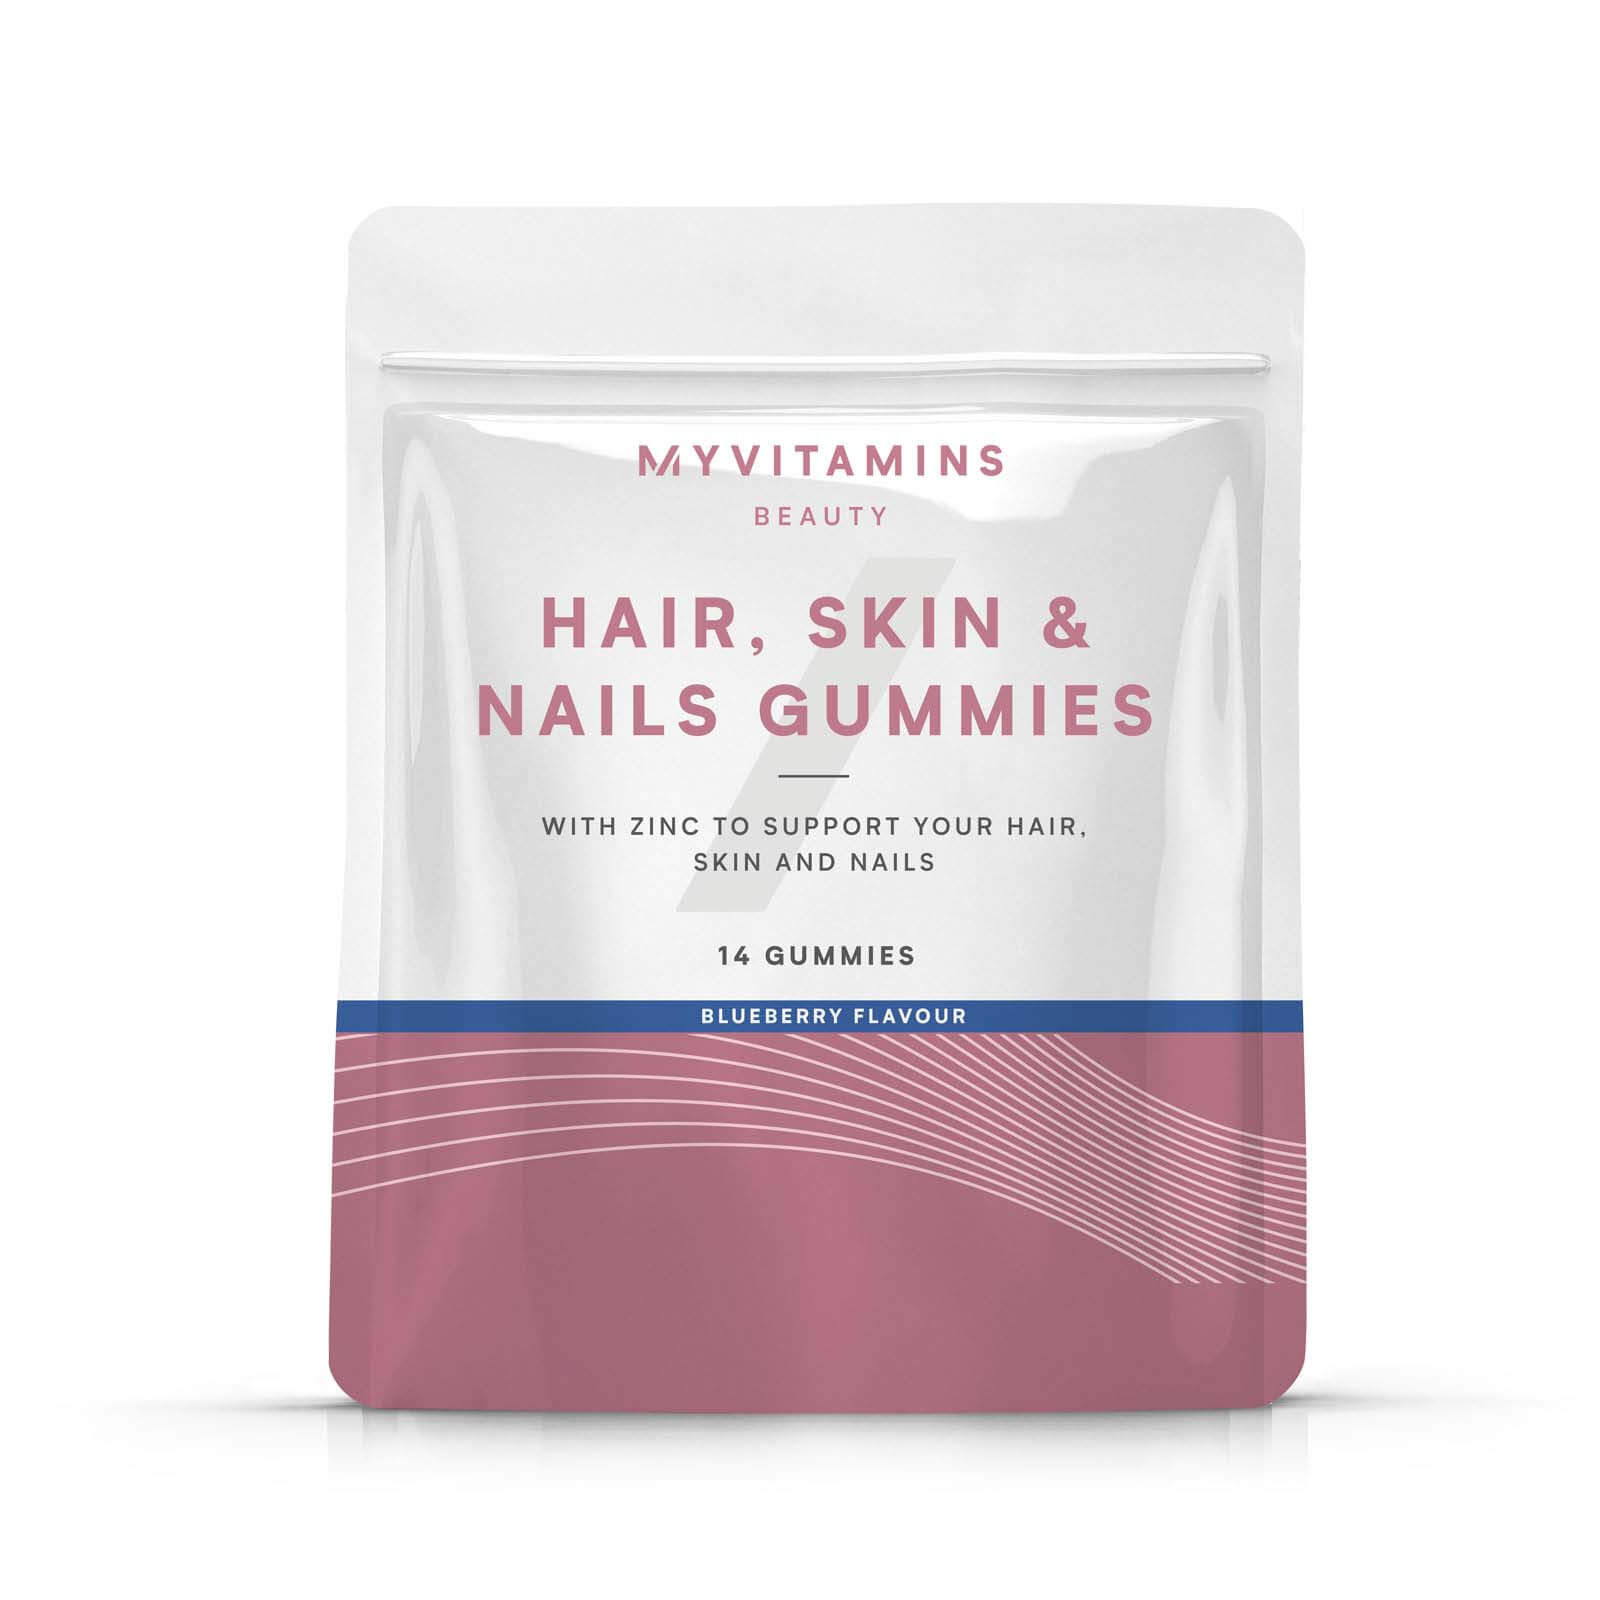 Myvitamins Hair Skin and Nails Gummies (Sample) - 14gommes à mâcher - Myrtille